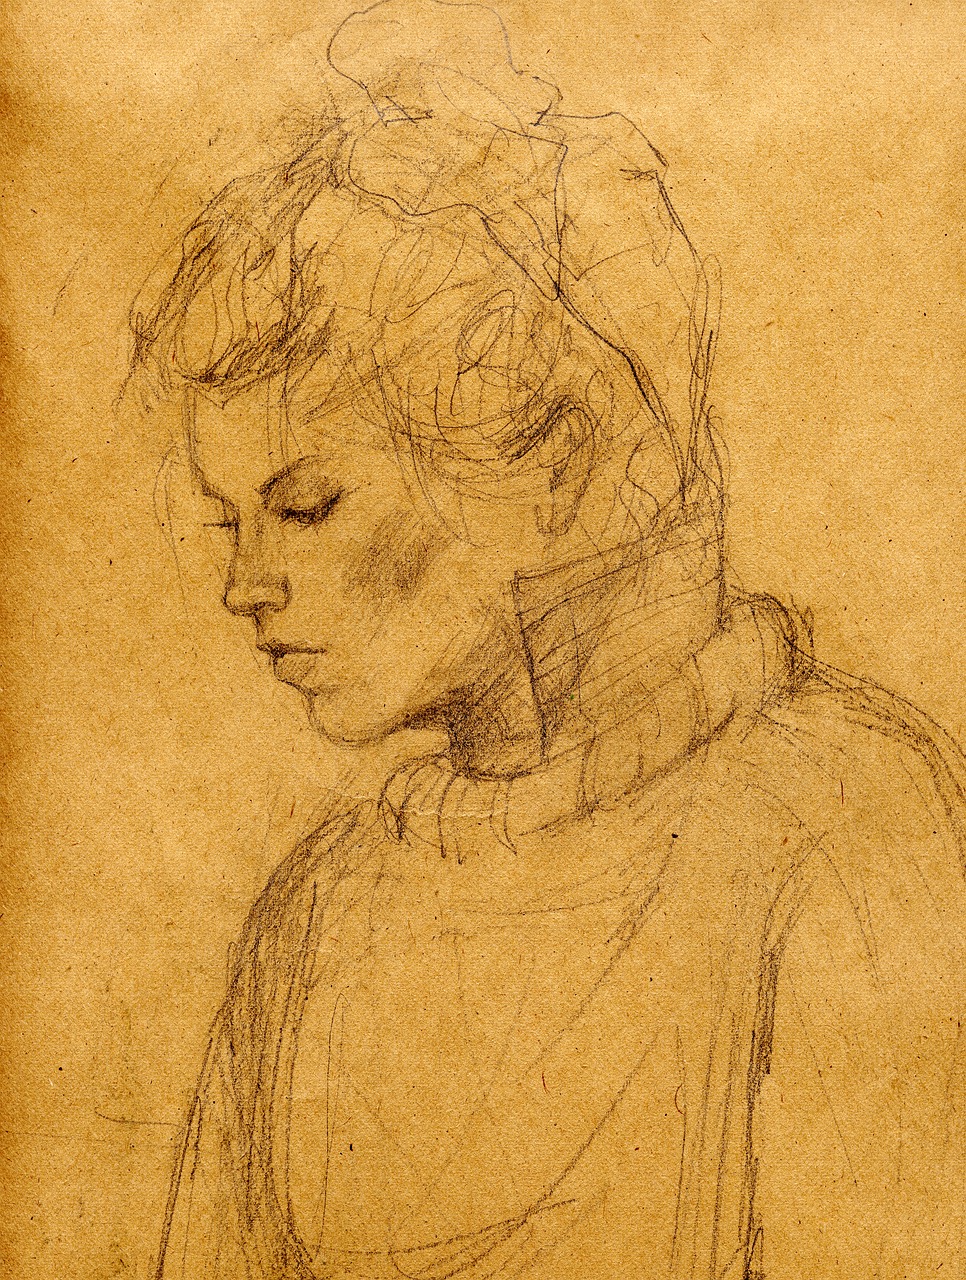 girl looking down sad sketch